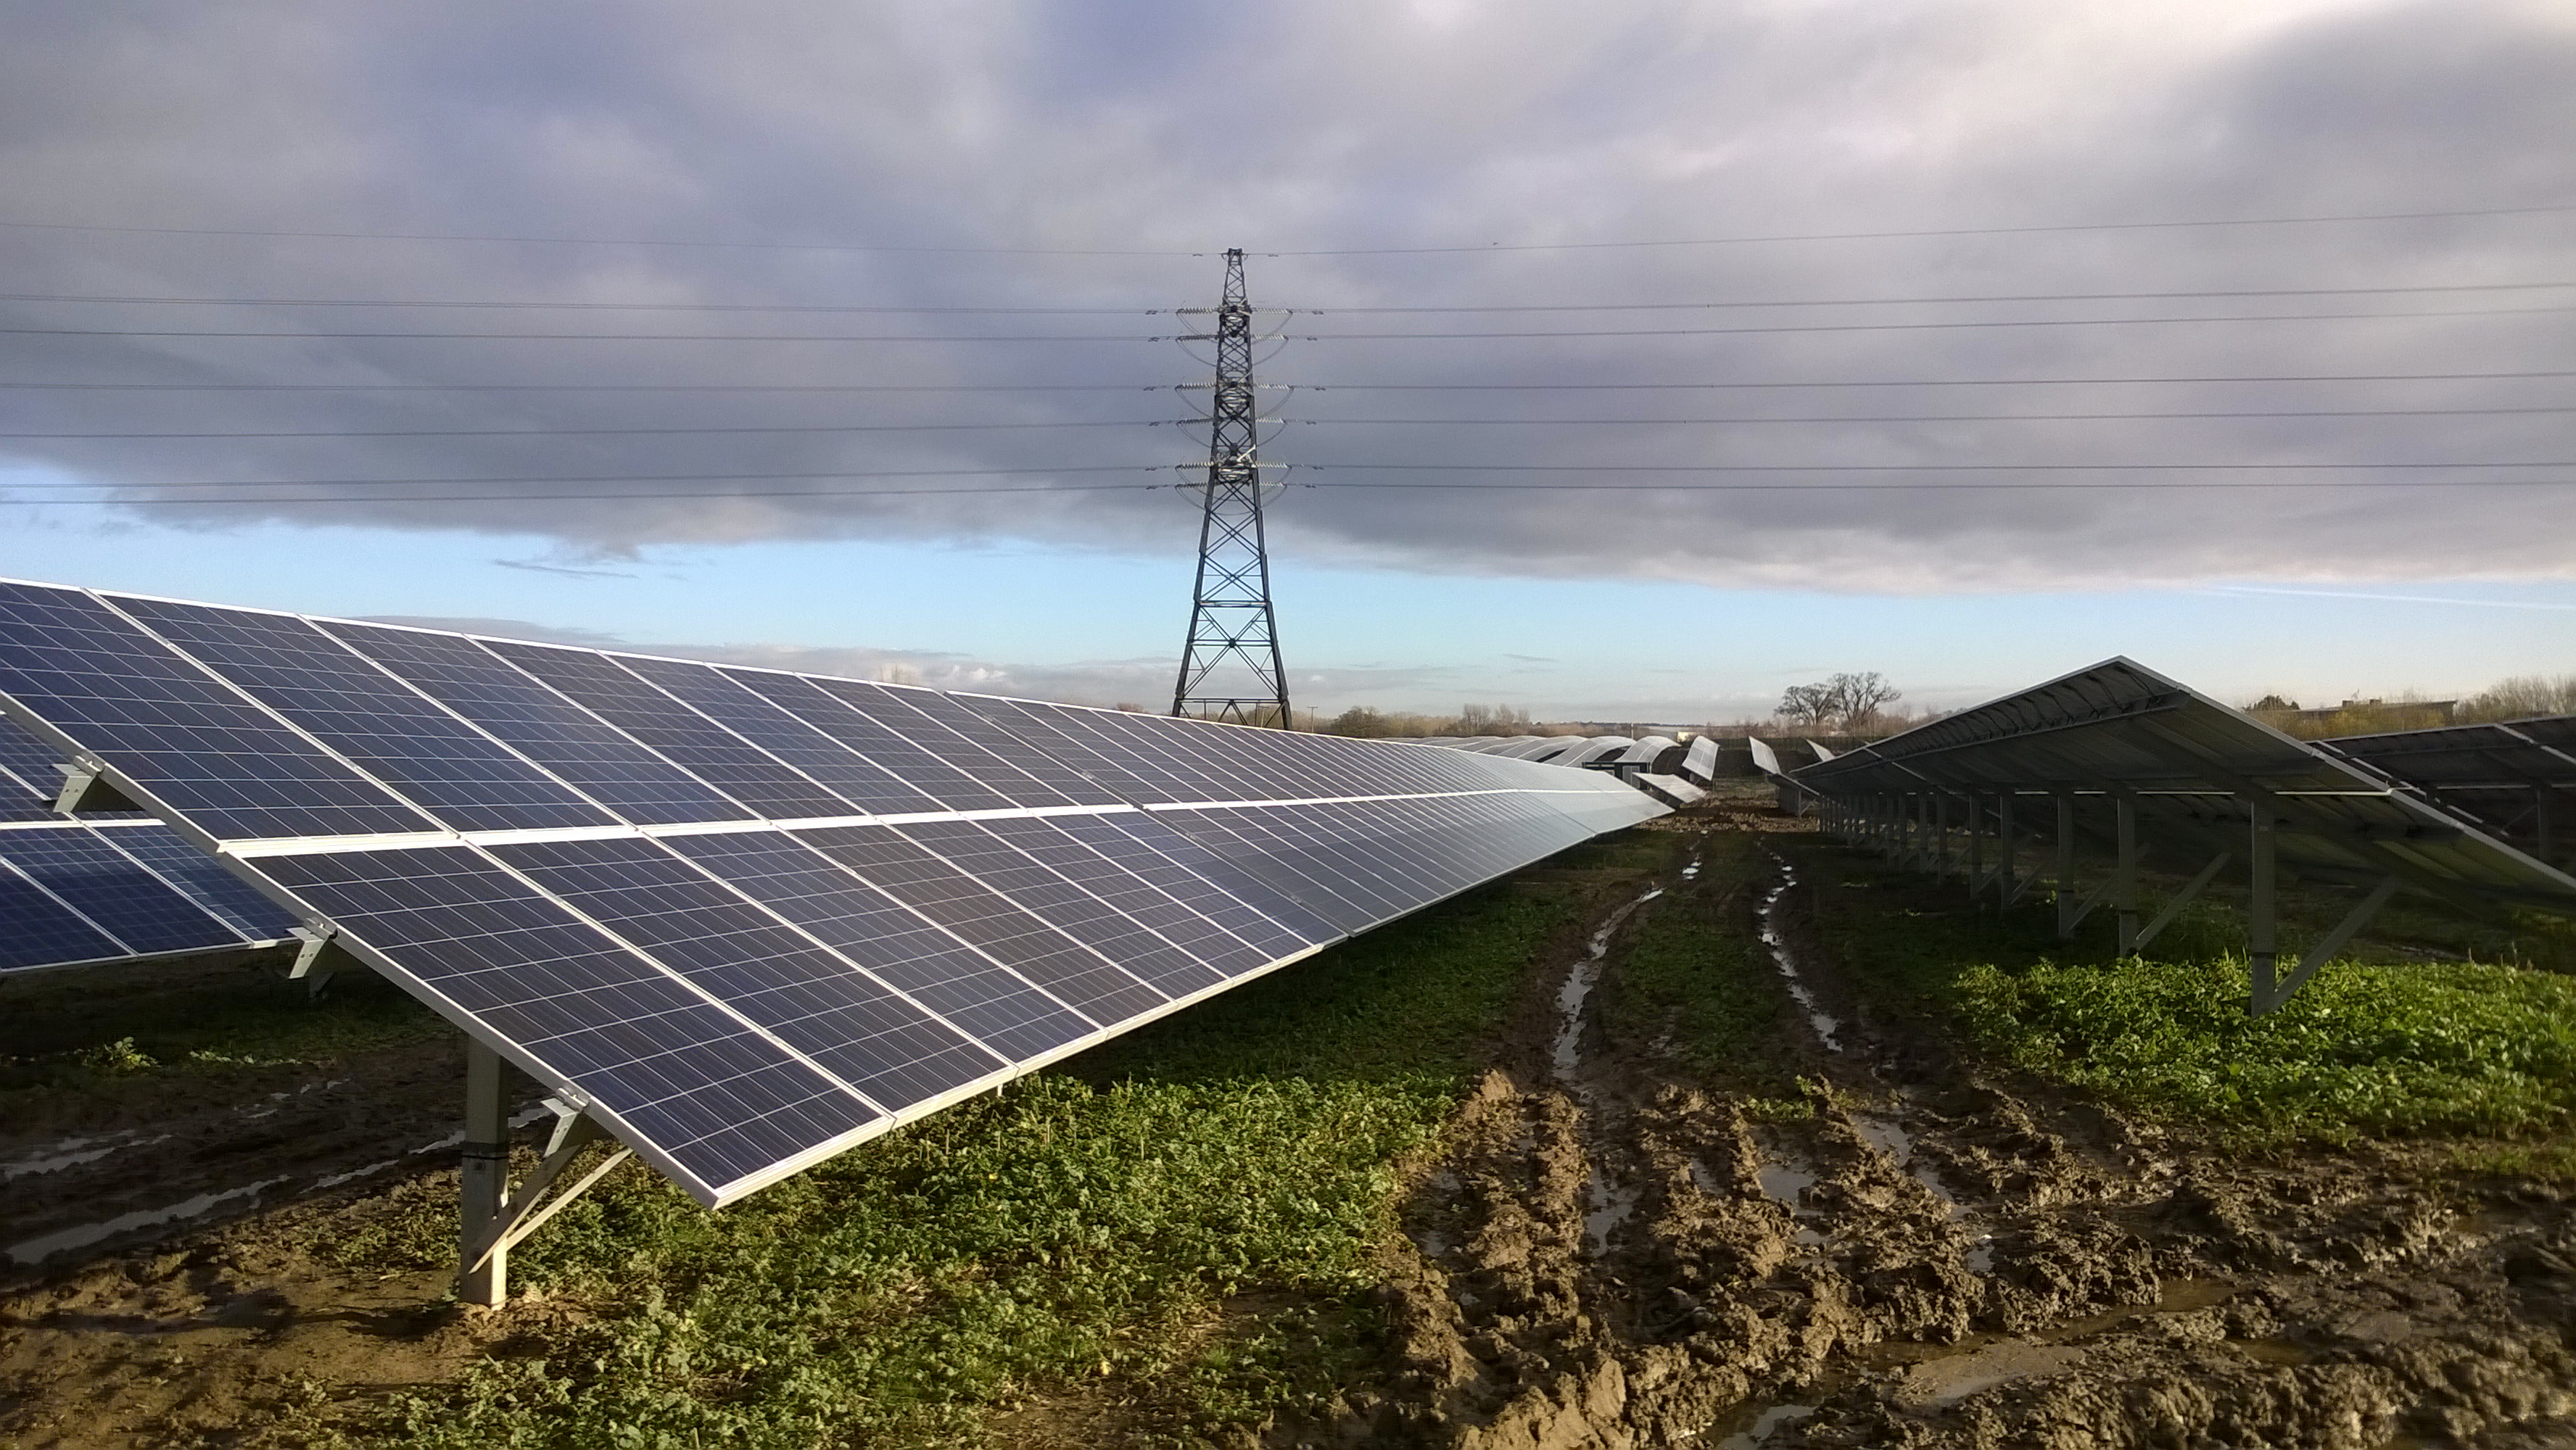 Solar farm powers 800 homes a year 